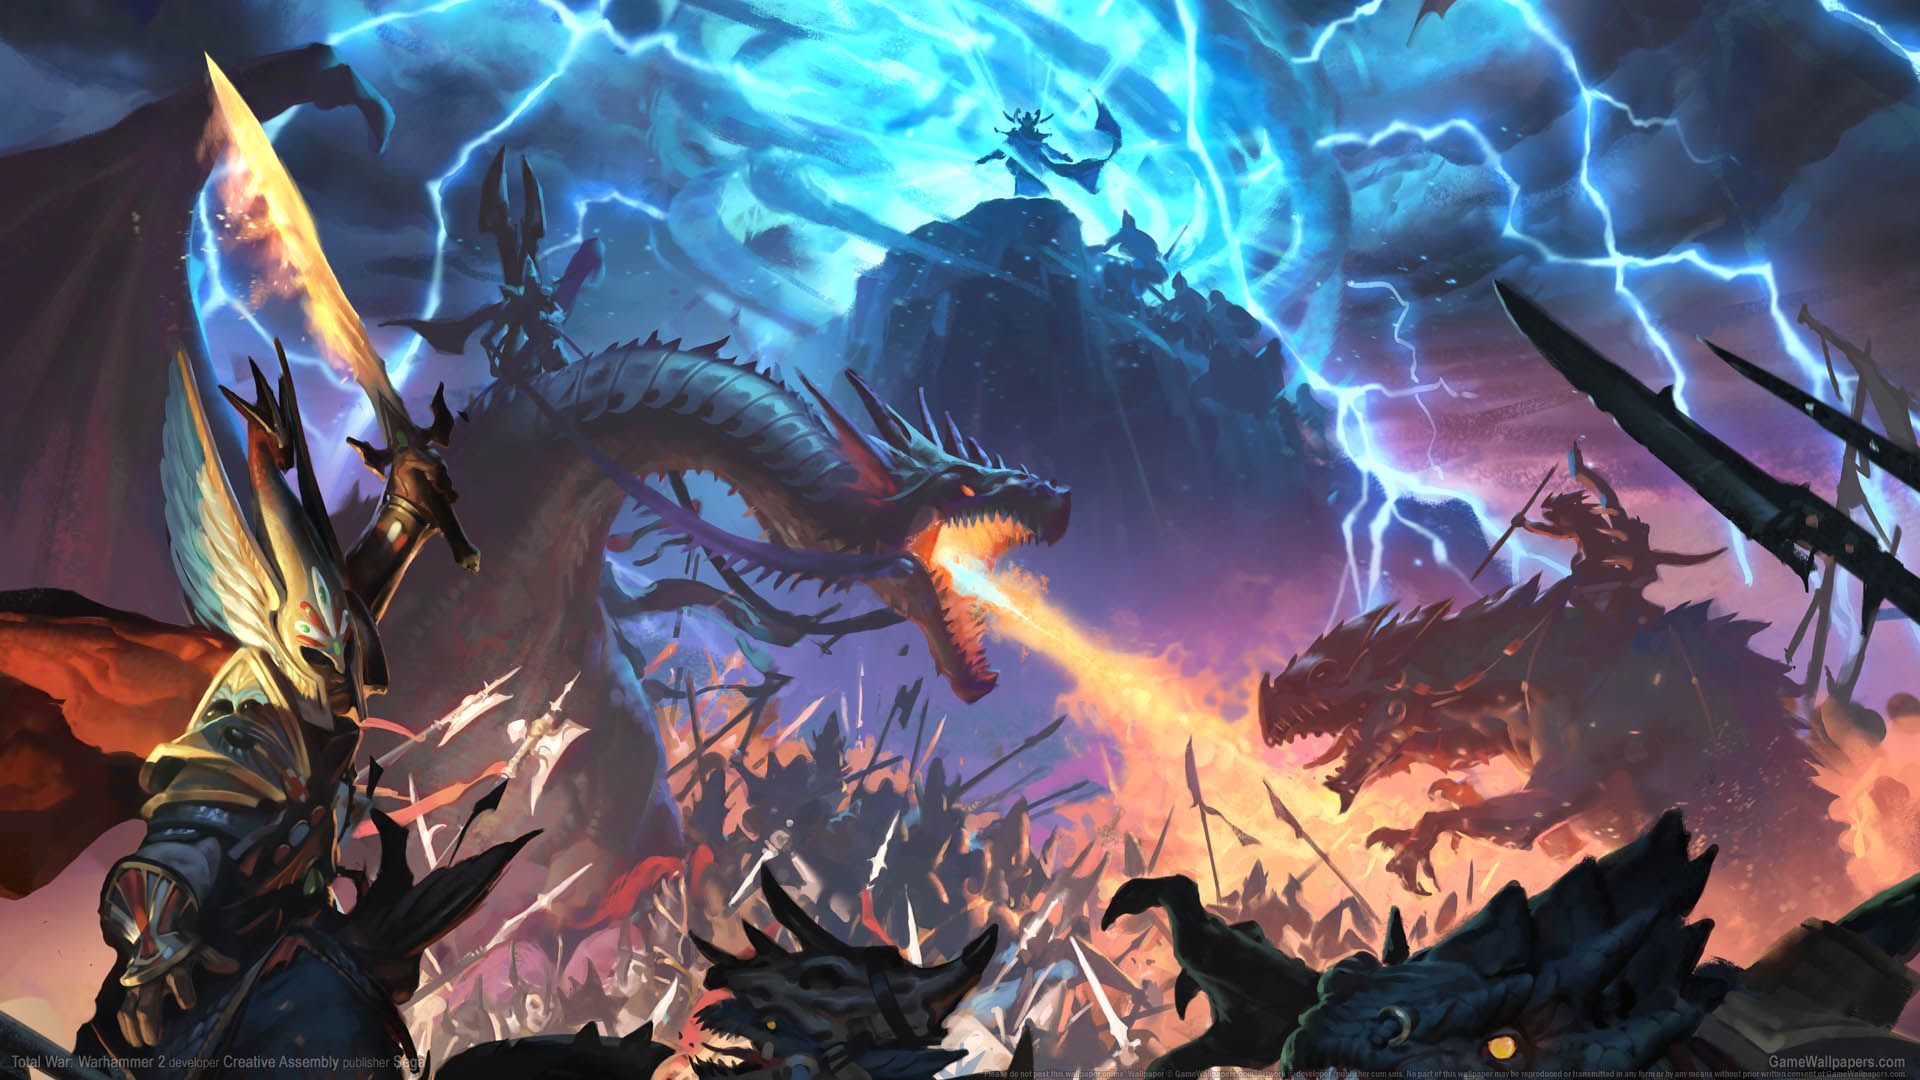 Total War: Warhammer III Wallpapers